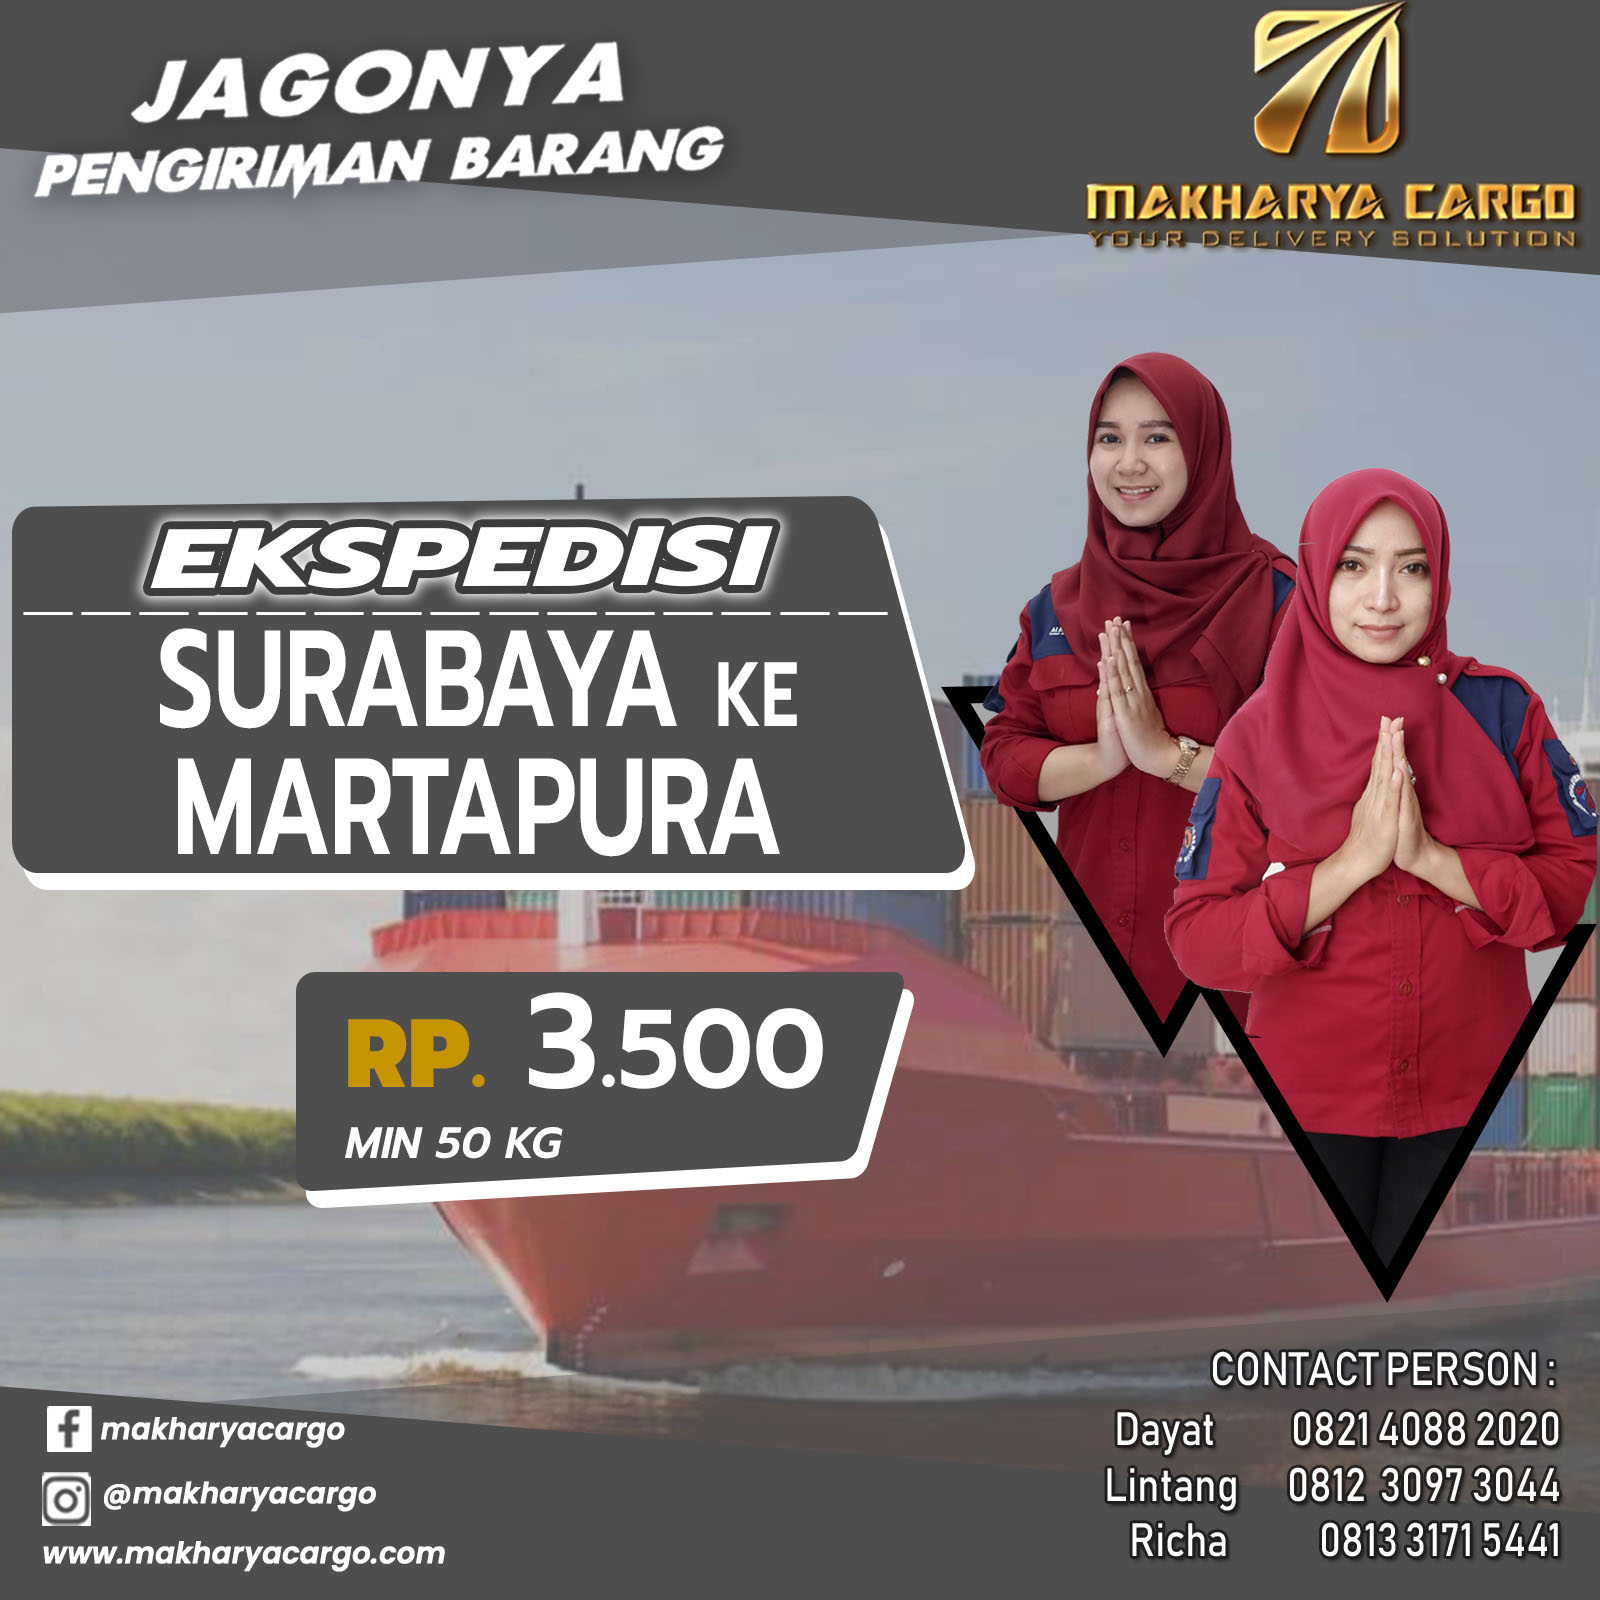 Ekspedisi Surabaya Martapura